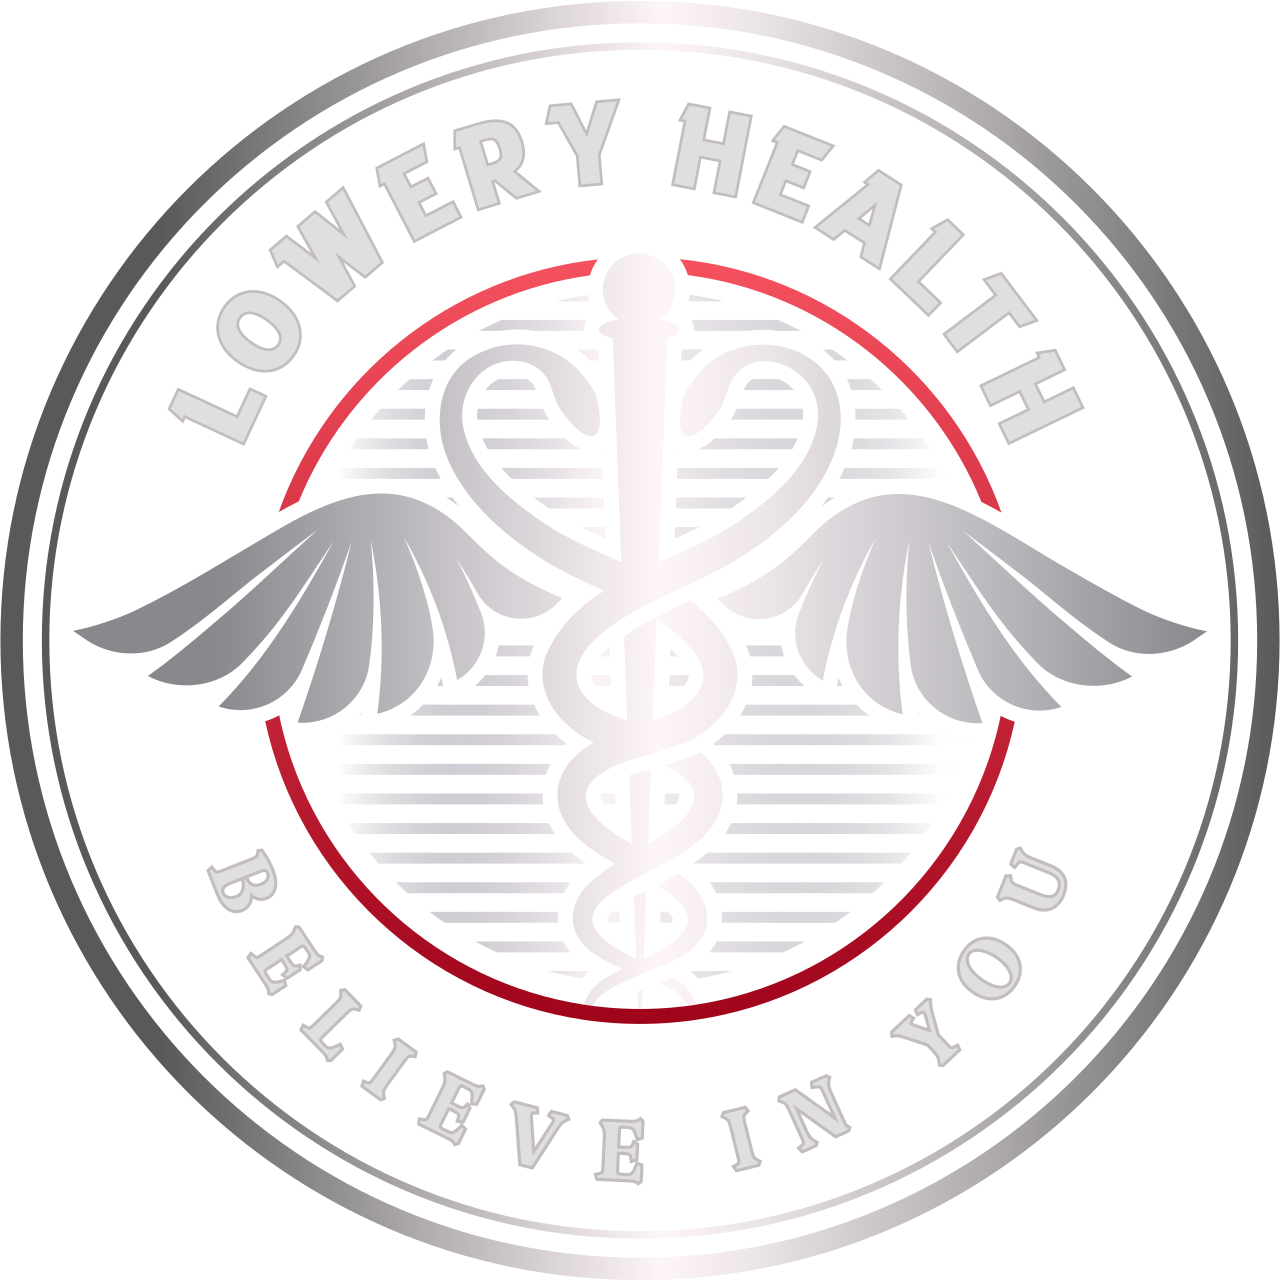 LOWERY HEALTH's logo